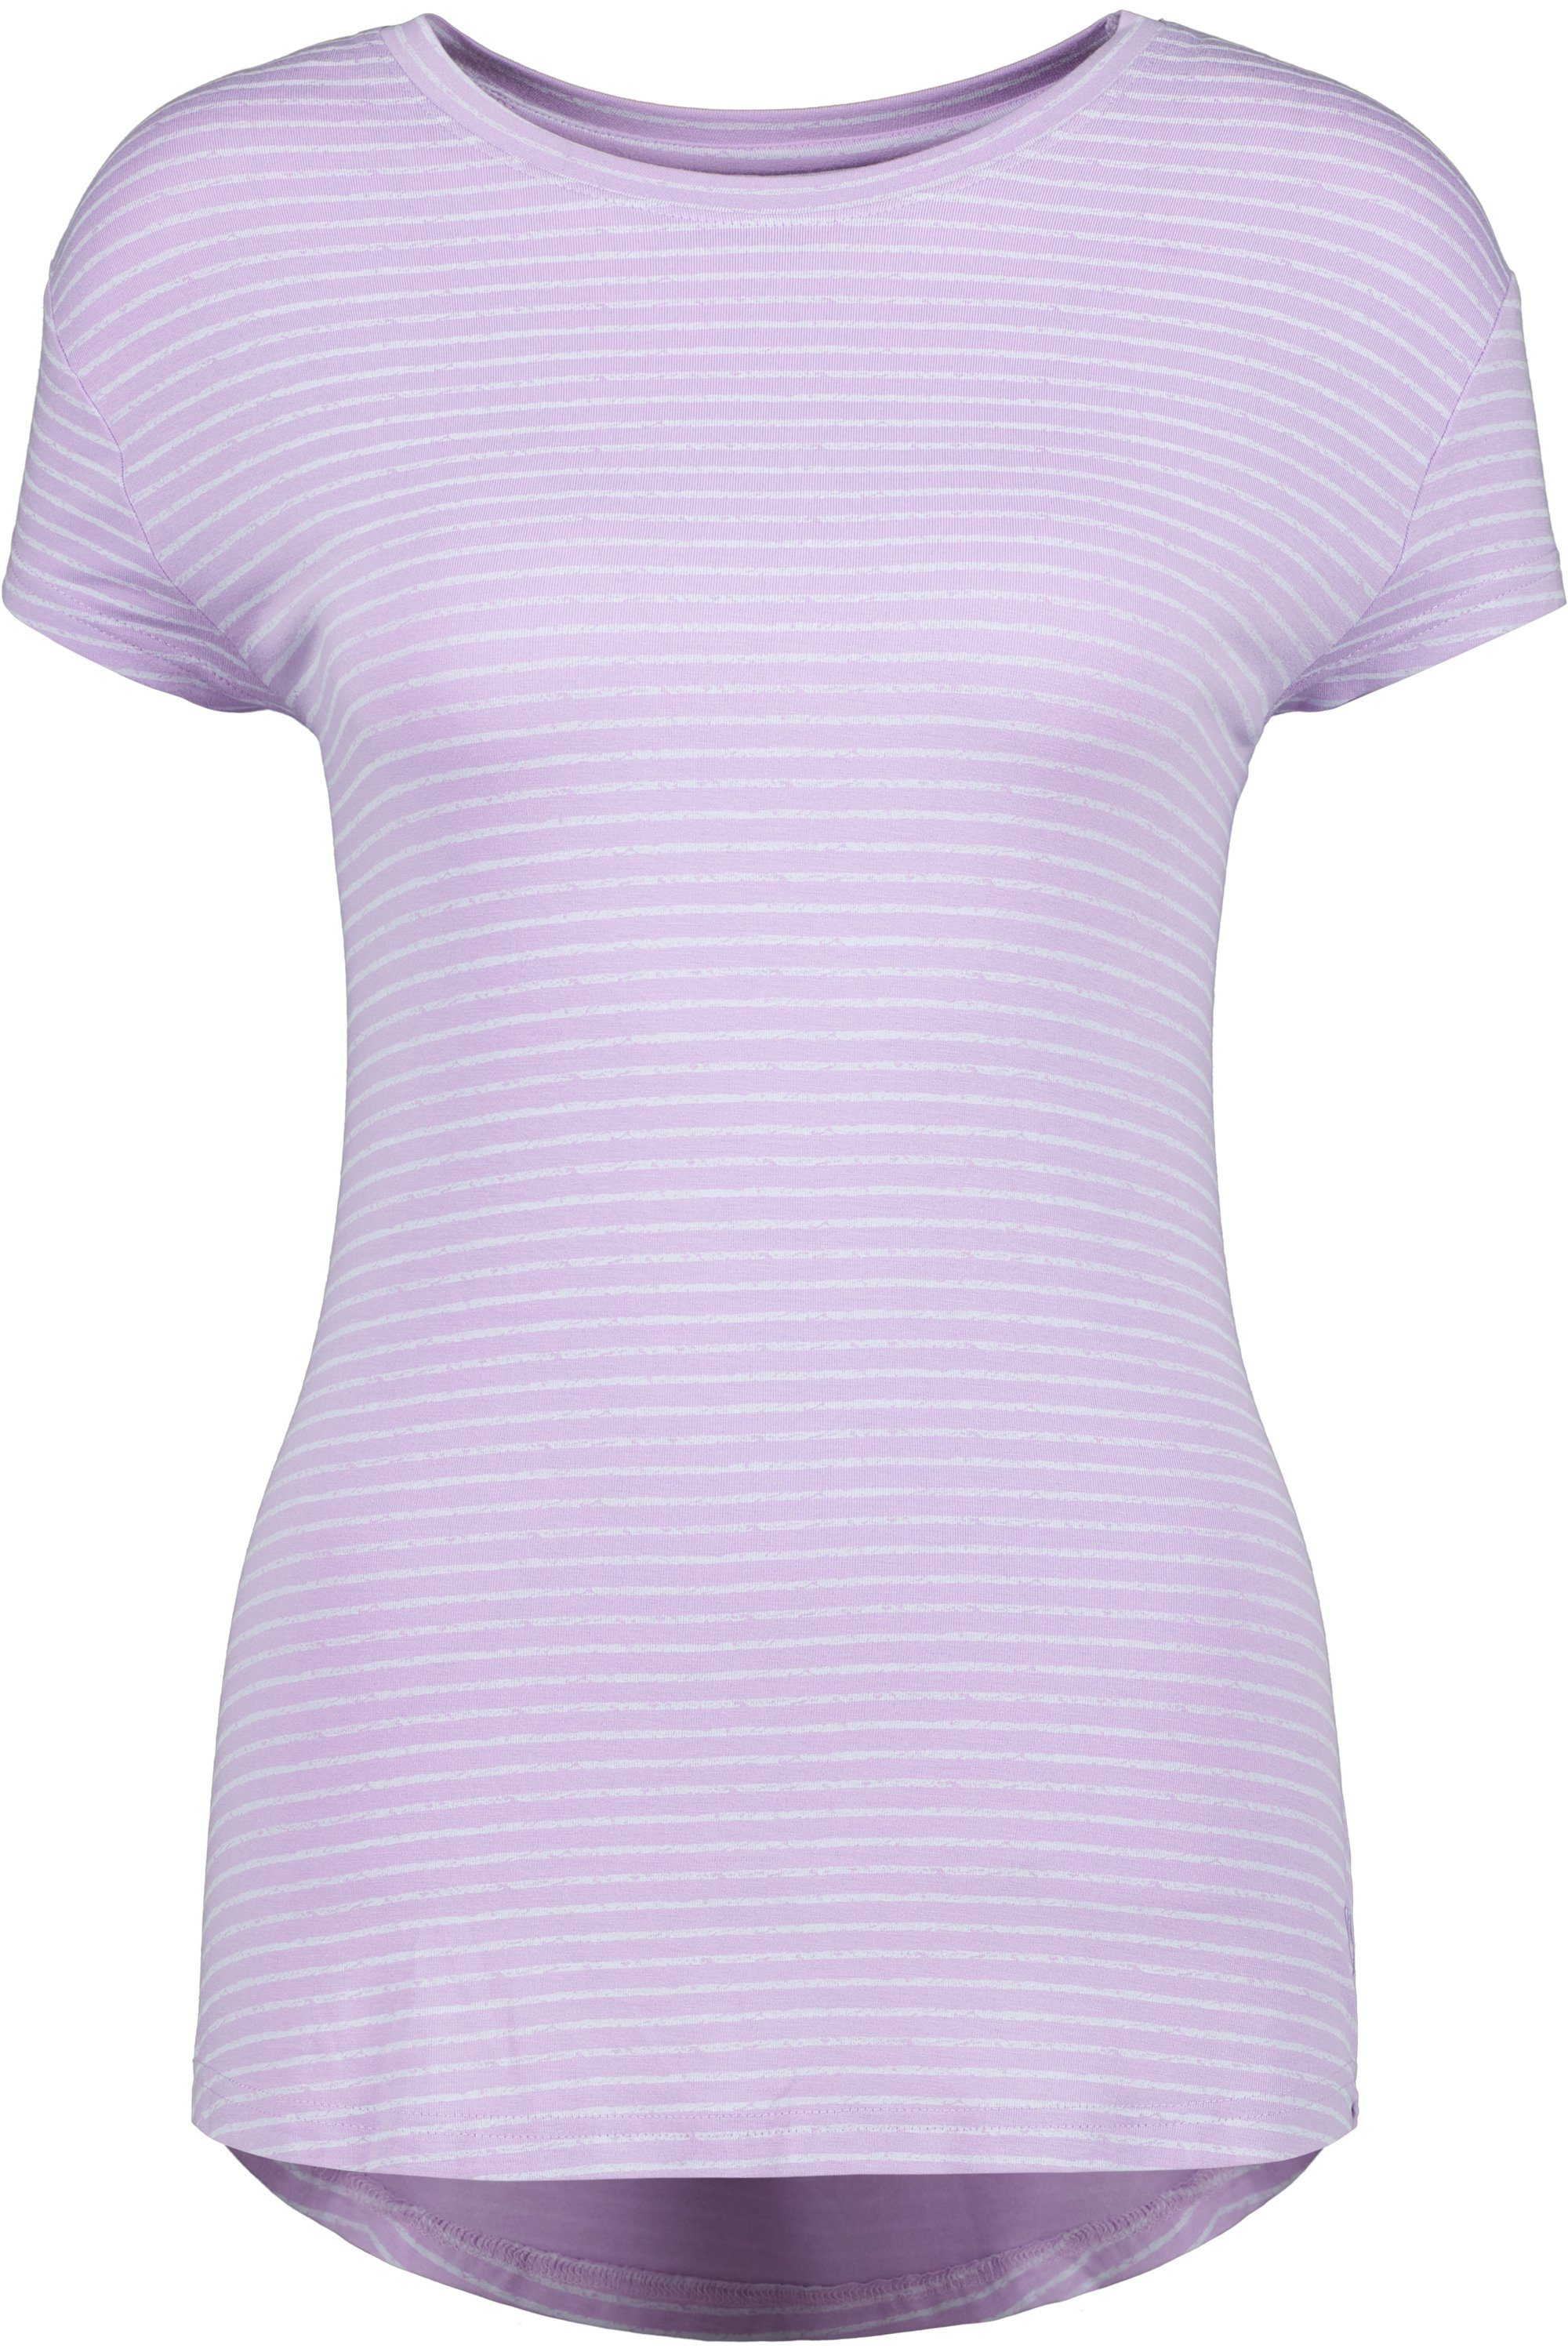 Alife & lavender MimmyAK Rundhalsshirt Damen Kurzarmshirt, Kickin Shirt Shirt Z digital